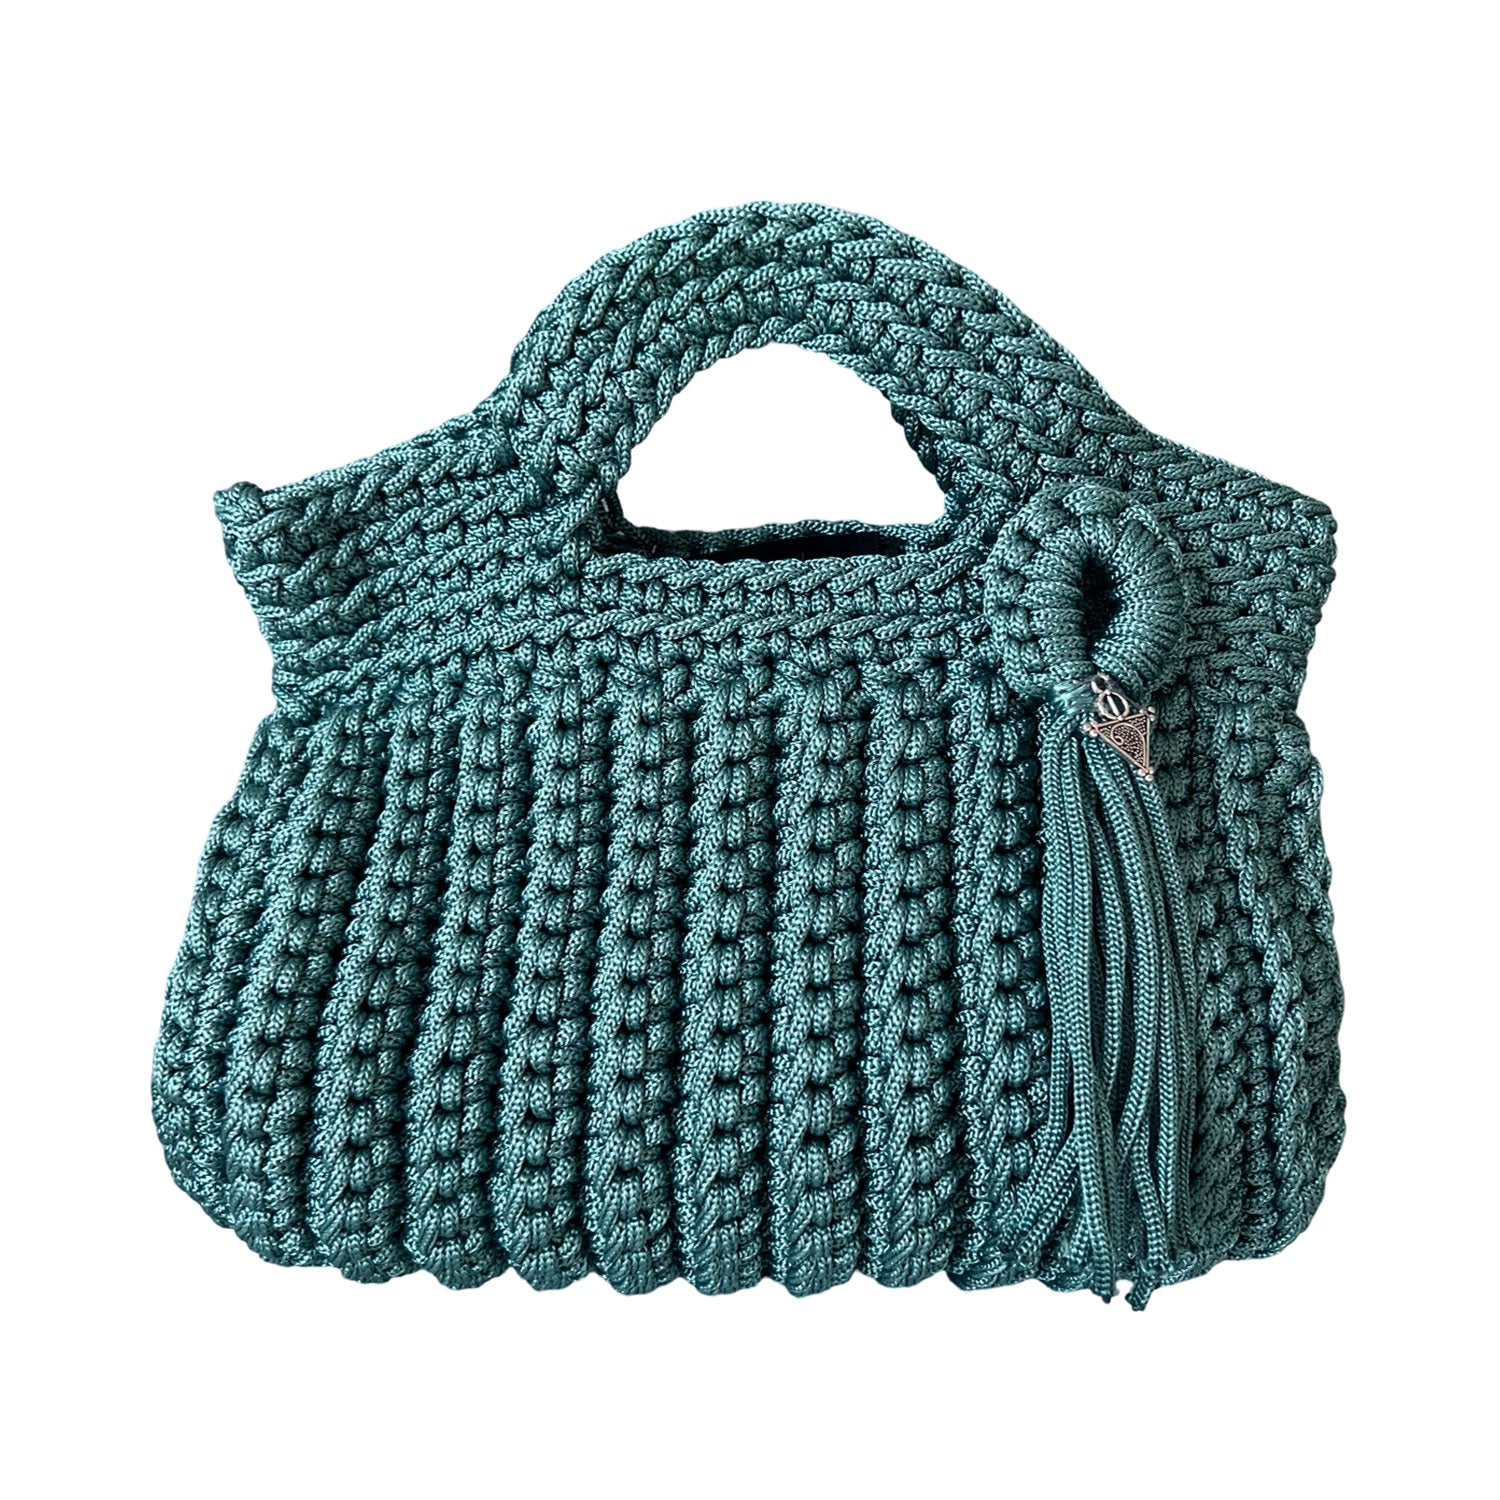 Mini Crochet Handbag in Turquoise